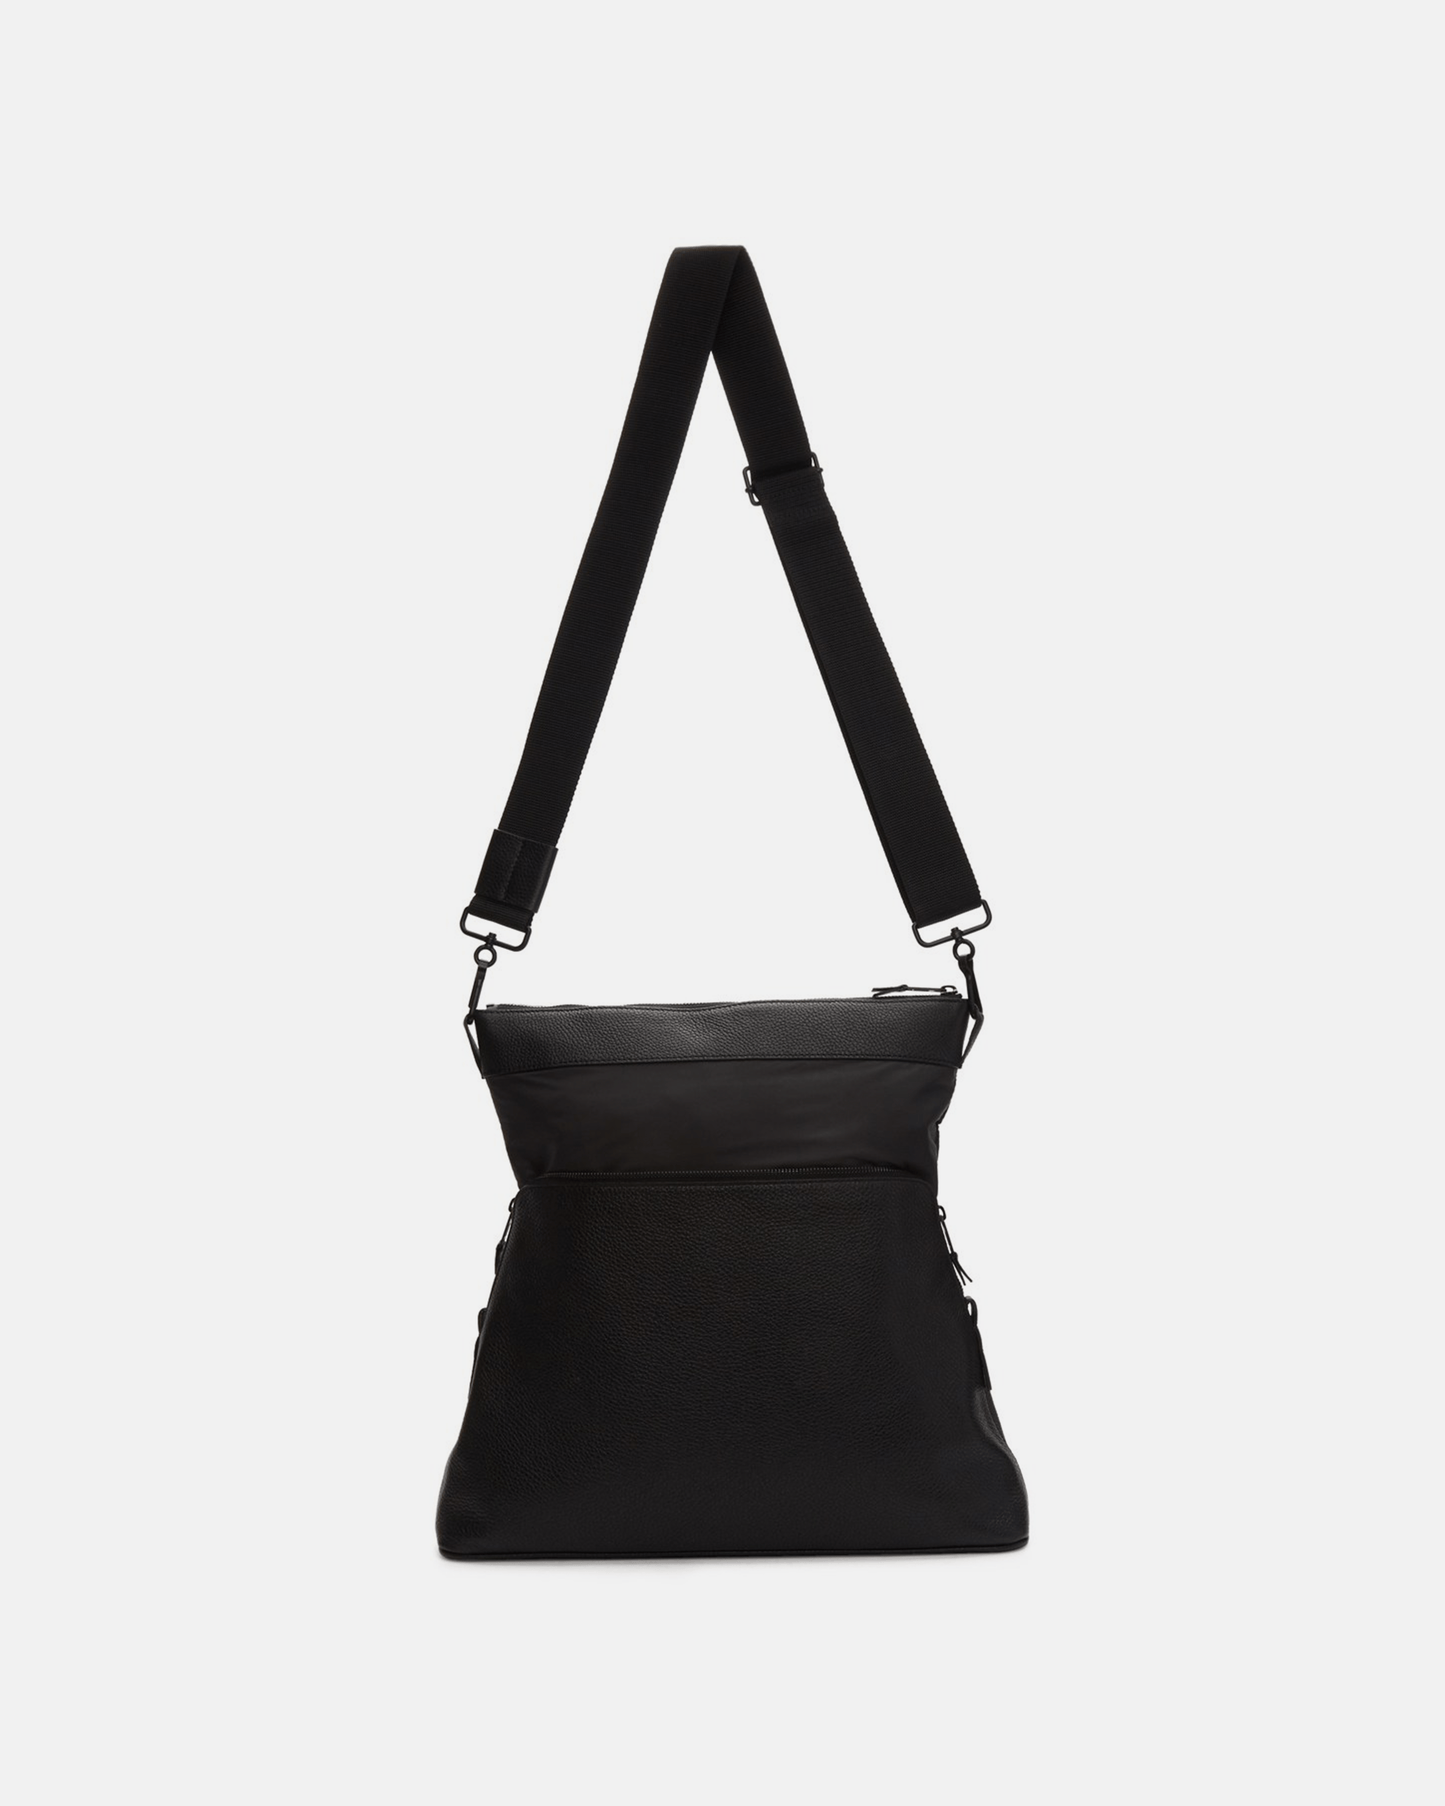 Maison Margiela Leather Goods 5AC Crossbody Bag in Black